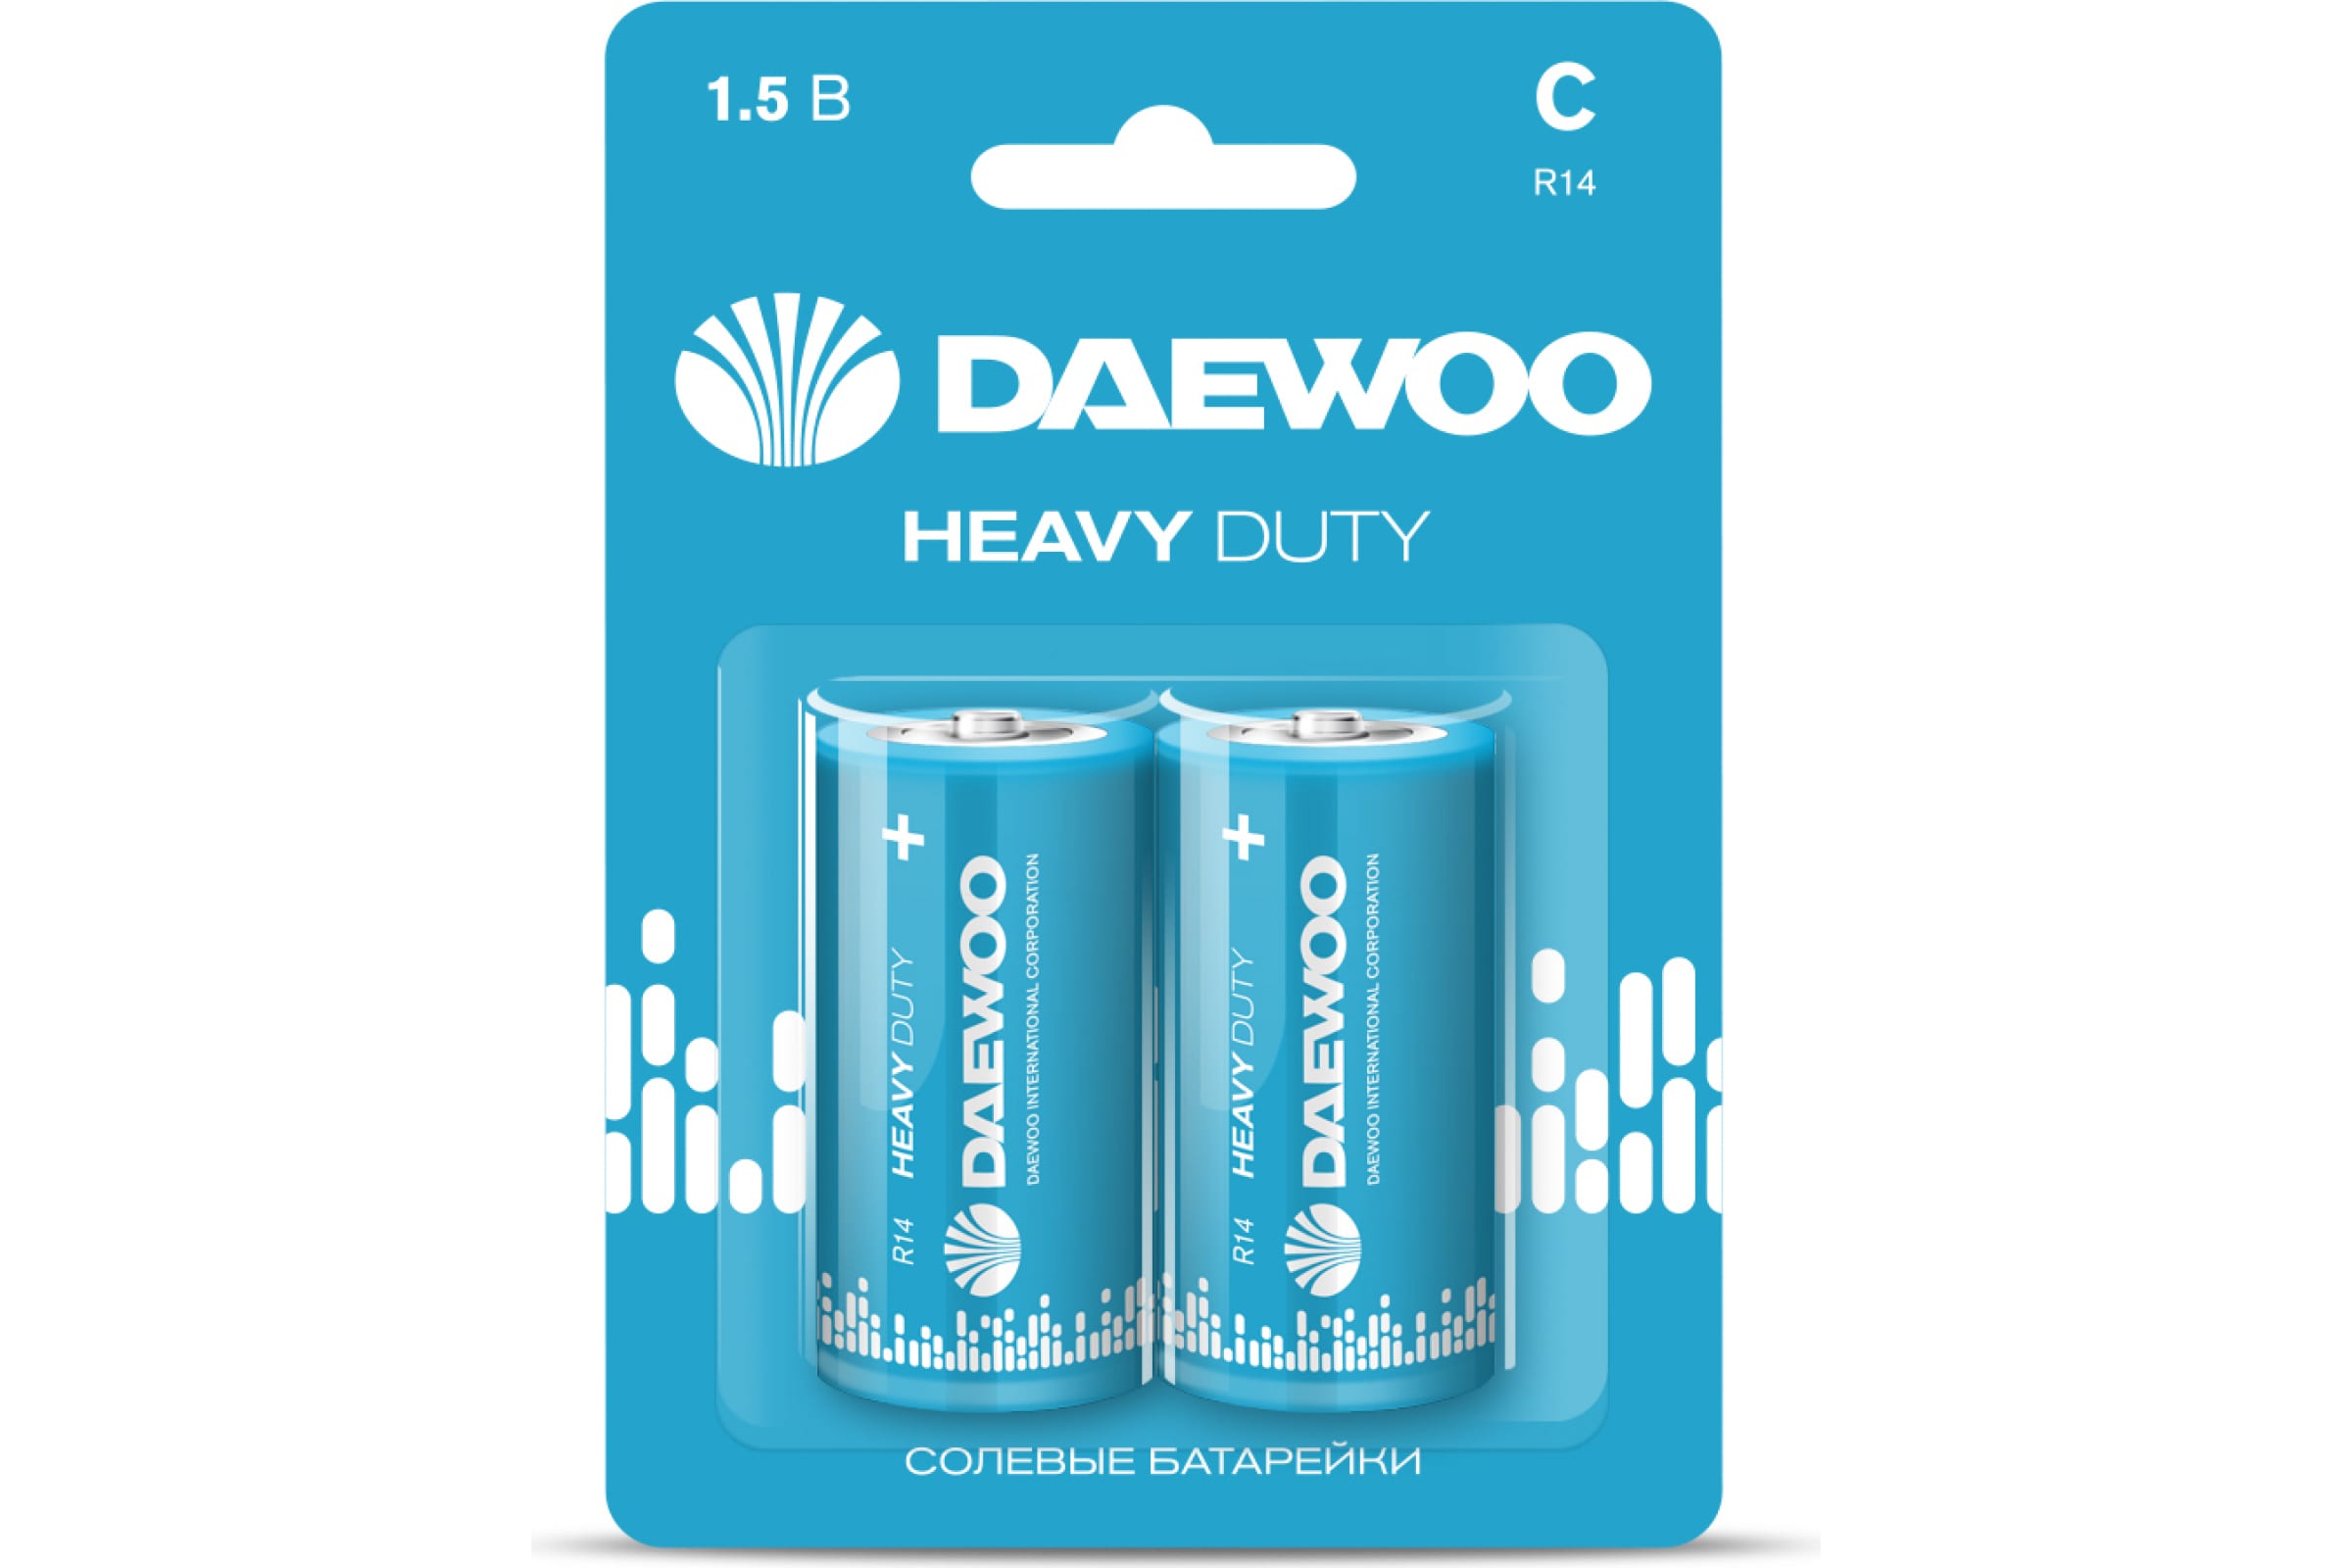 фото Daewoo солевая батарейка r14 heavy duty bl-2 5029422